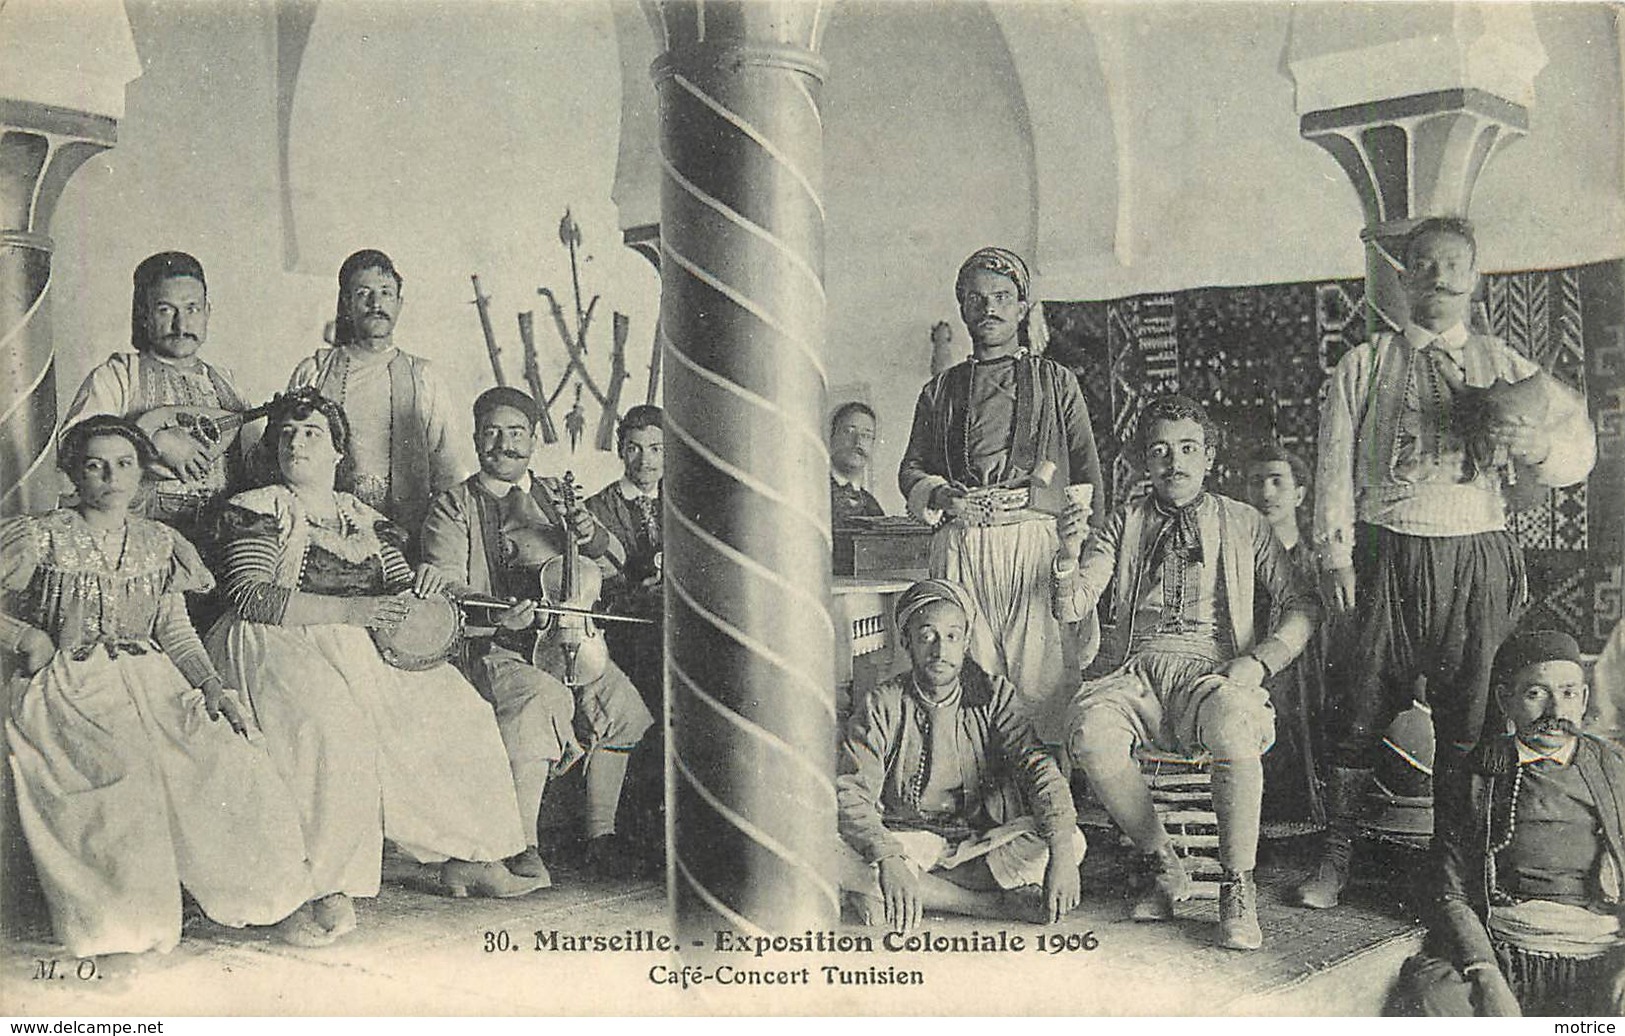 MARSEILLE - Exposition Coloniale 1906, Café Concert Tunisien. - Internationale Tentoonstelling Voor Elektriciteit En Andere